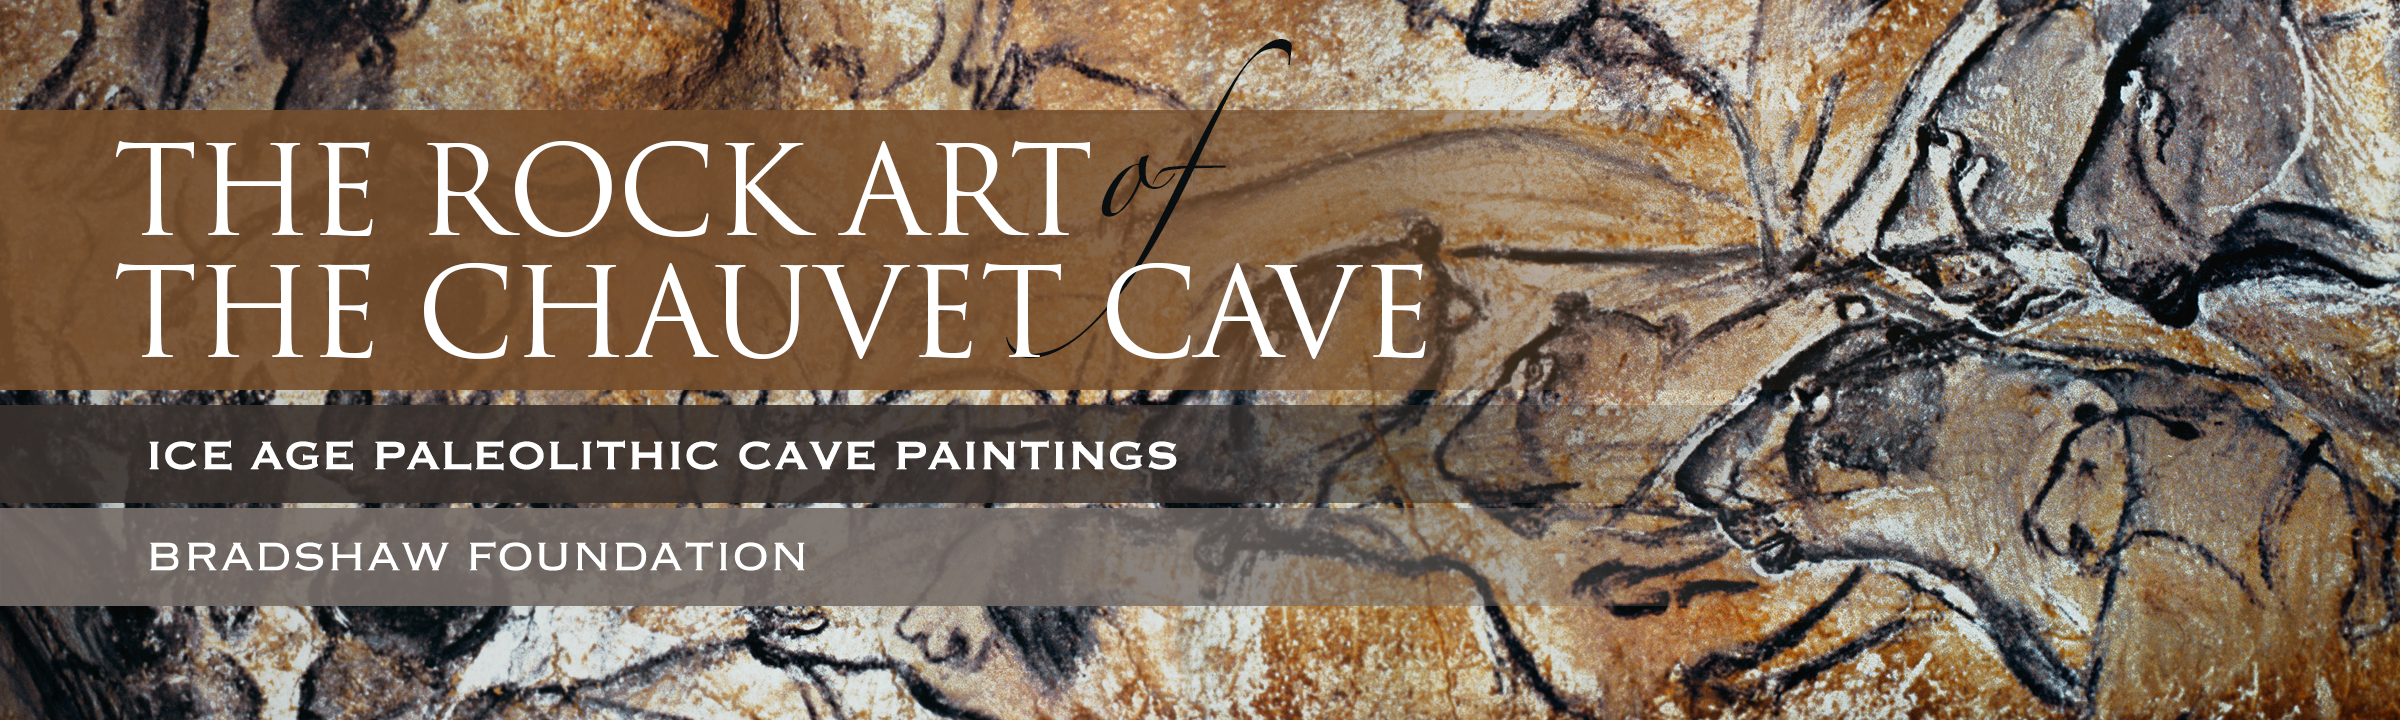 Chauvet Cave granted World Heritage Status